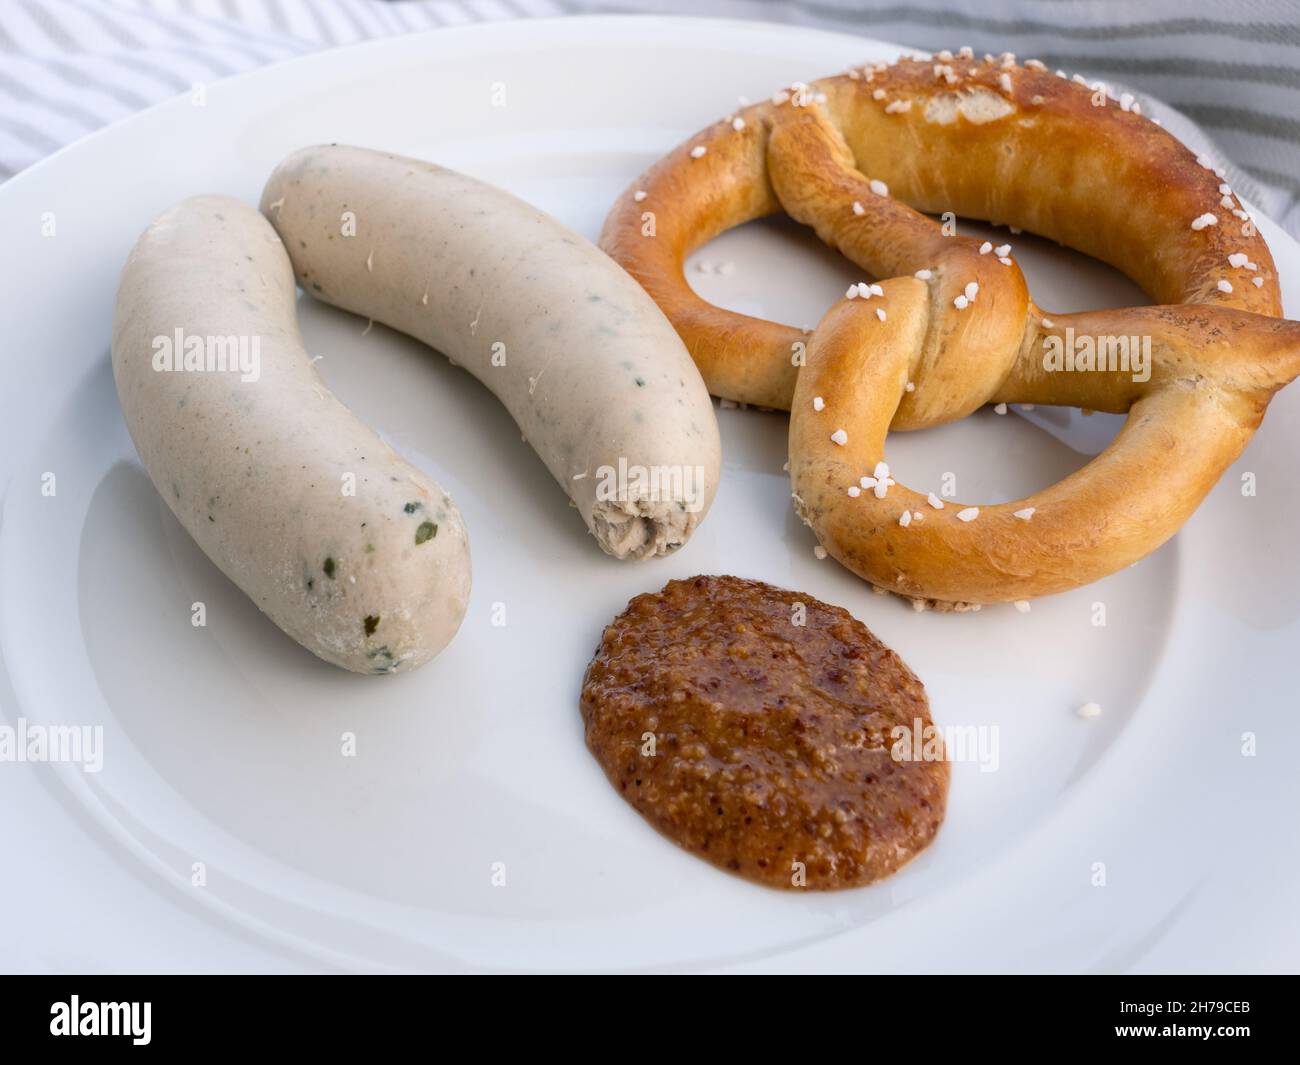 Weisswurst salsiccia bianca bavarese o tedesca con Pretzel e senape dolce Foto Stock